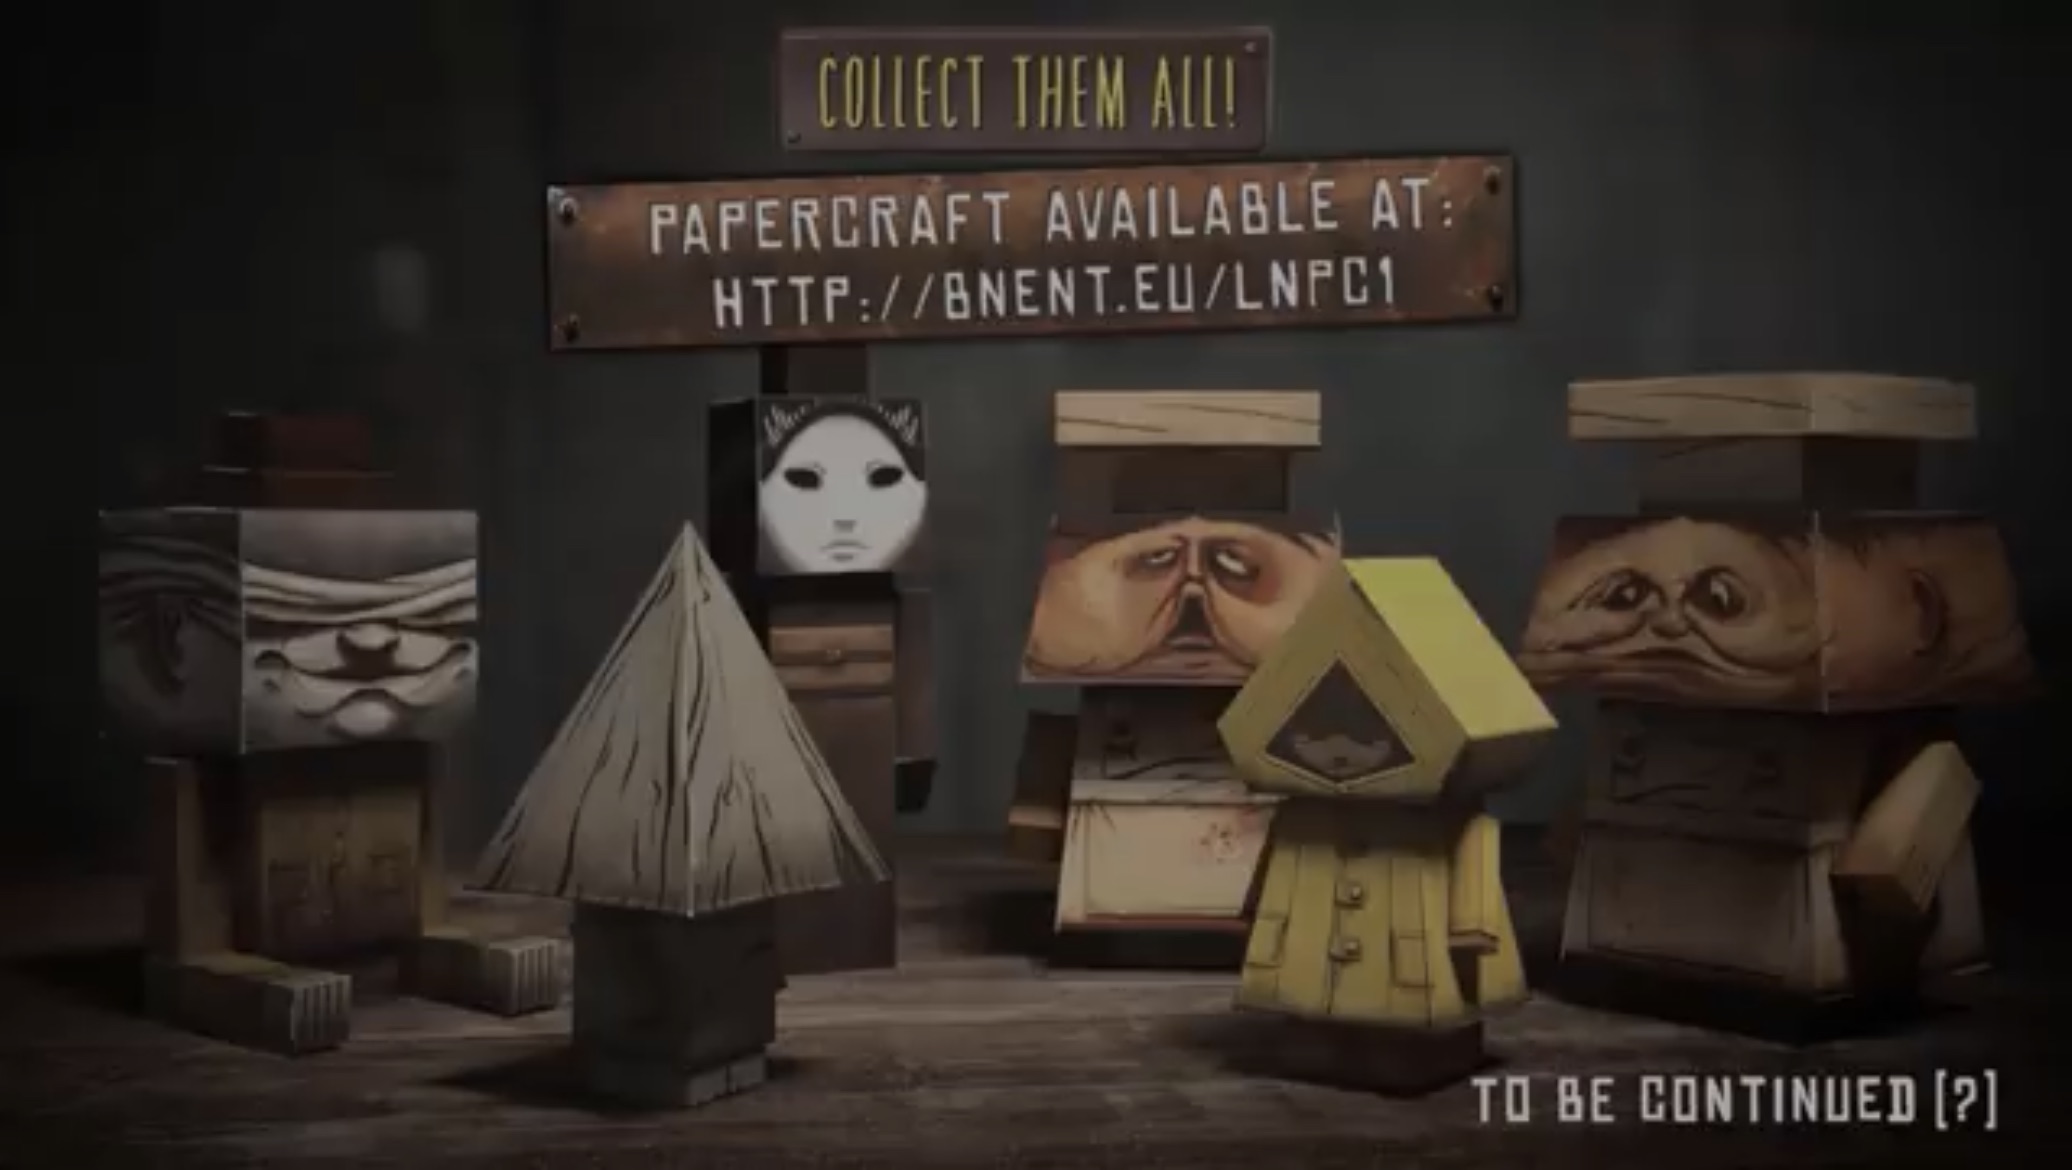 PaperCraft